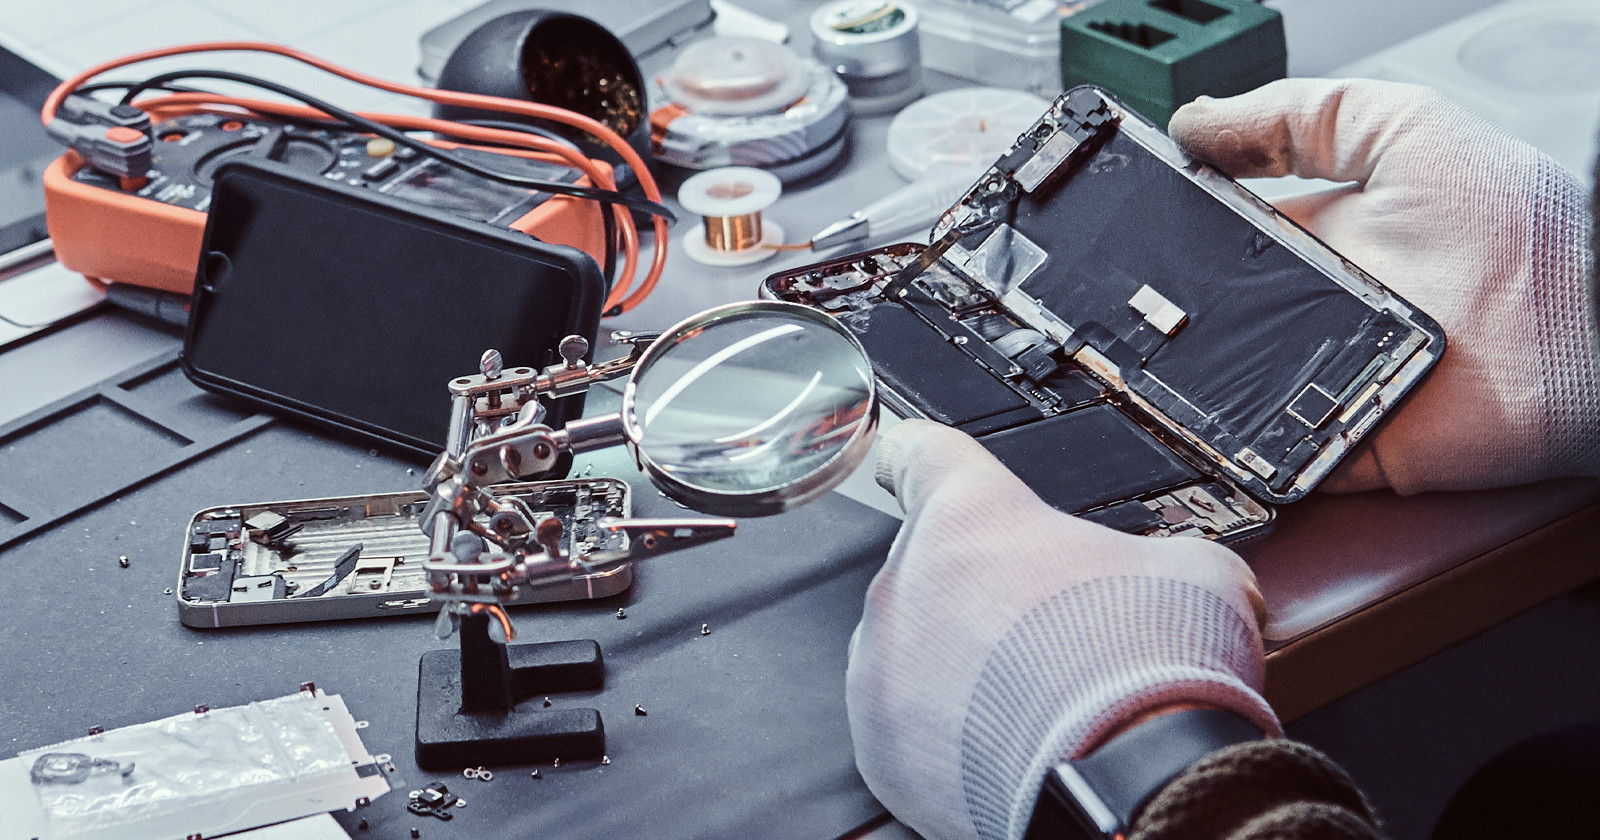  york state passes landmark electronics right repair 